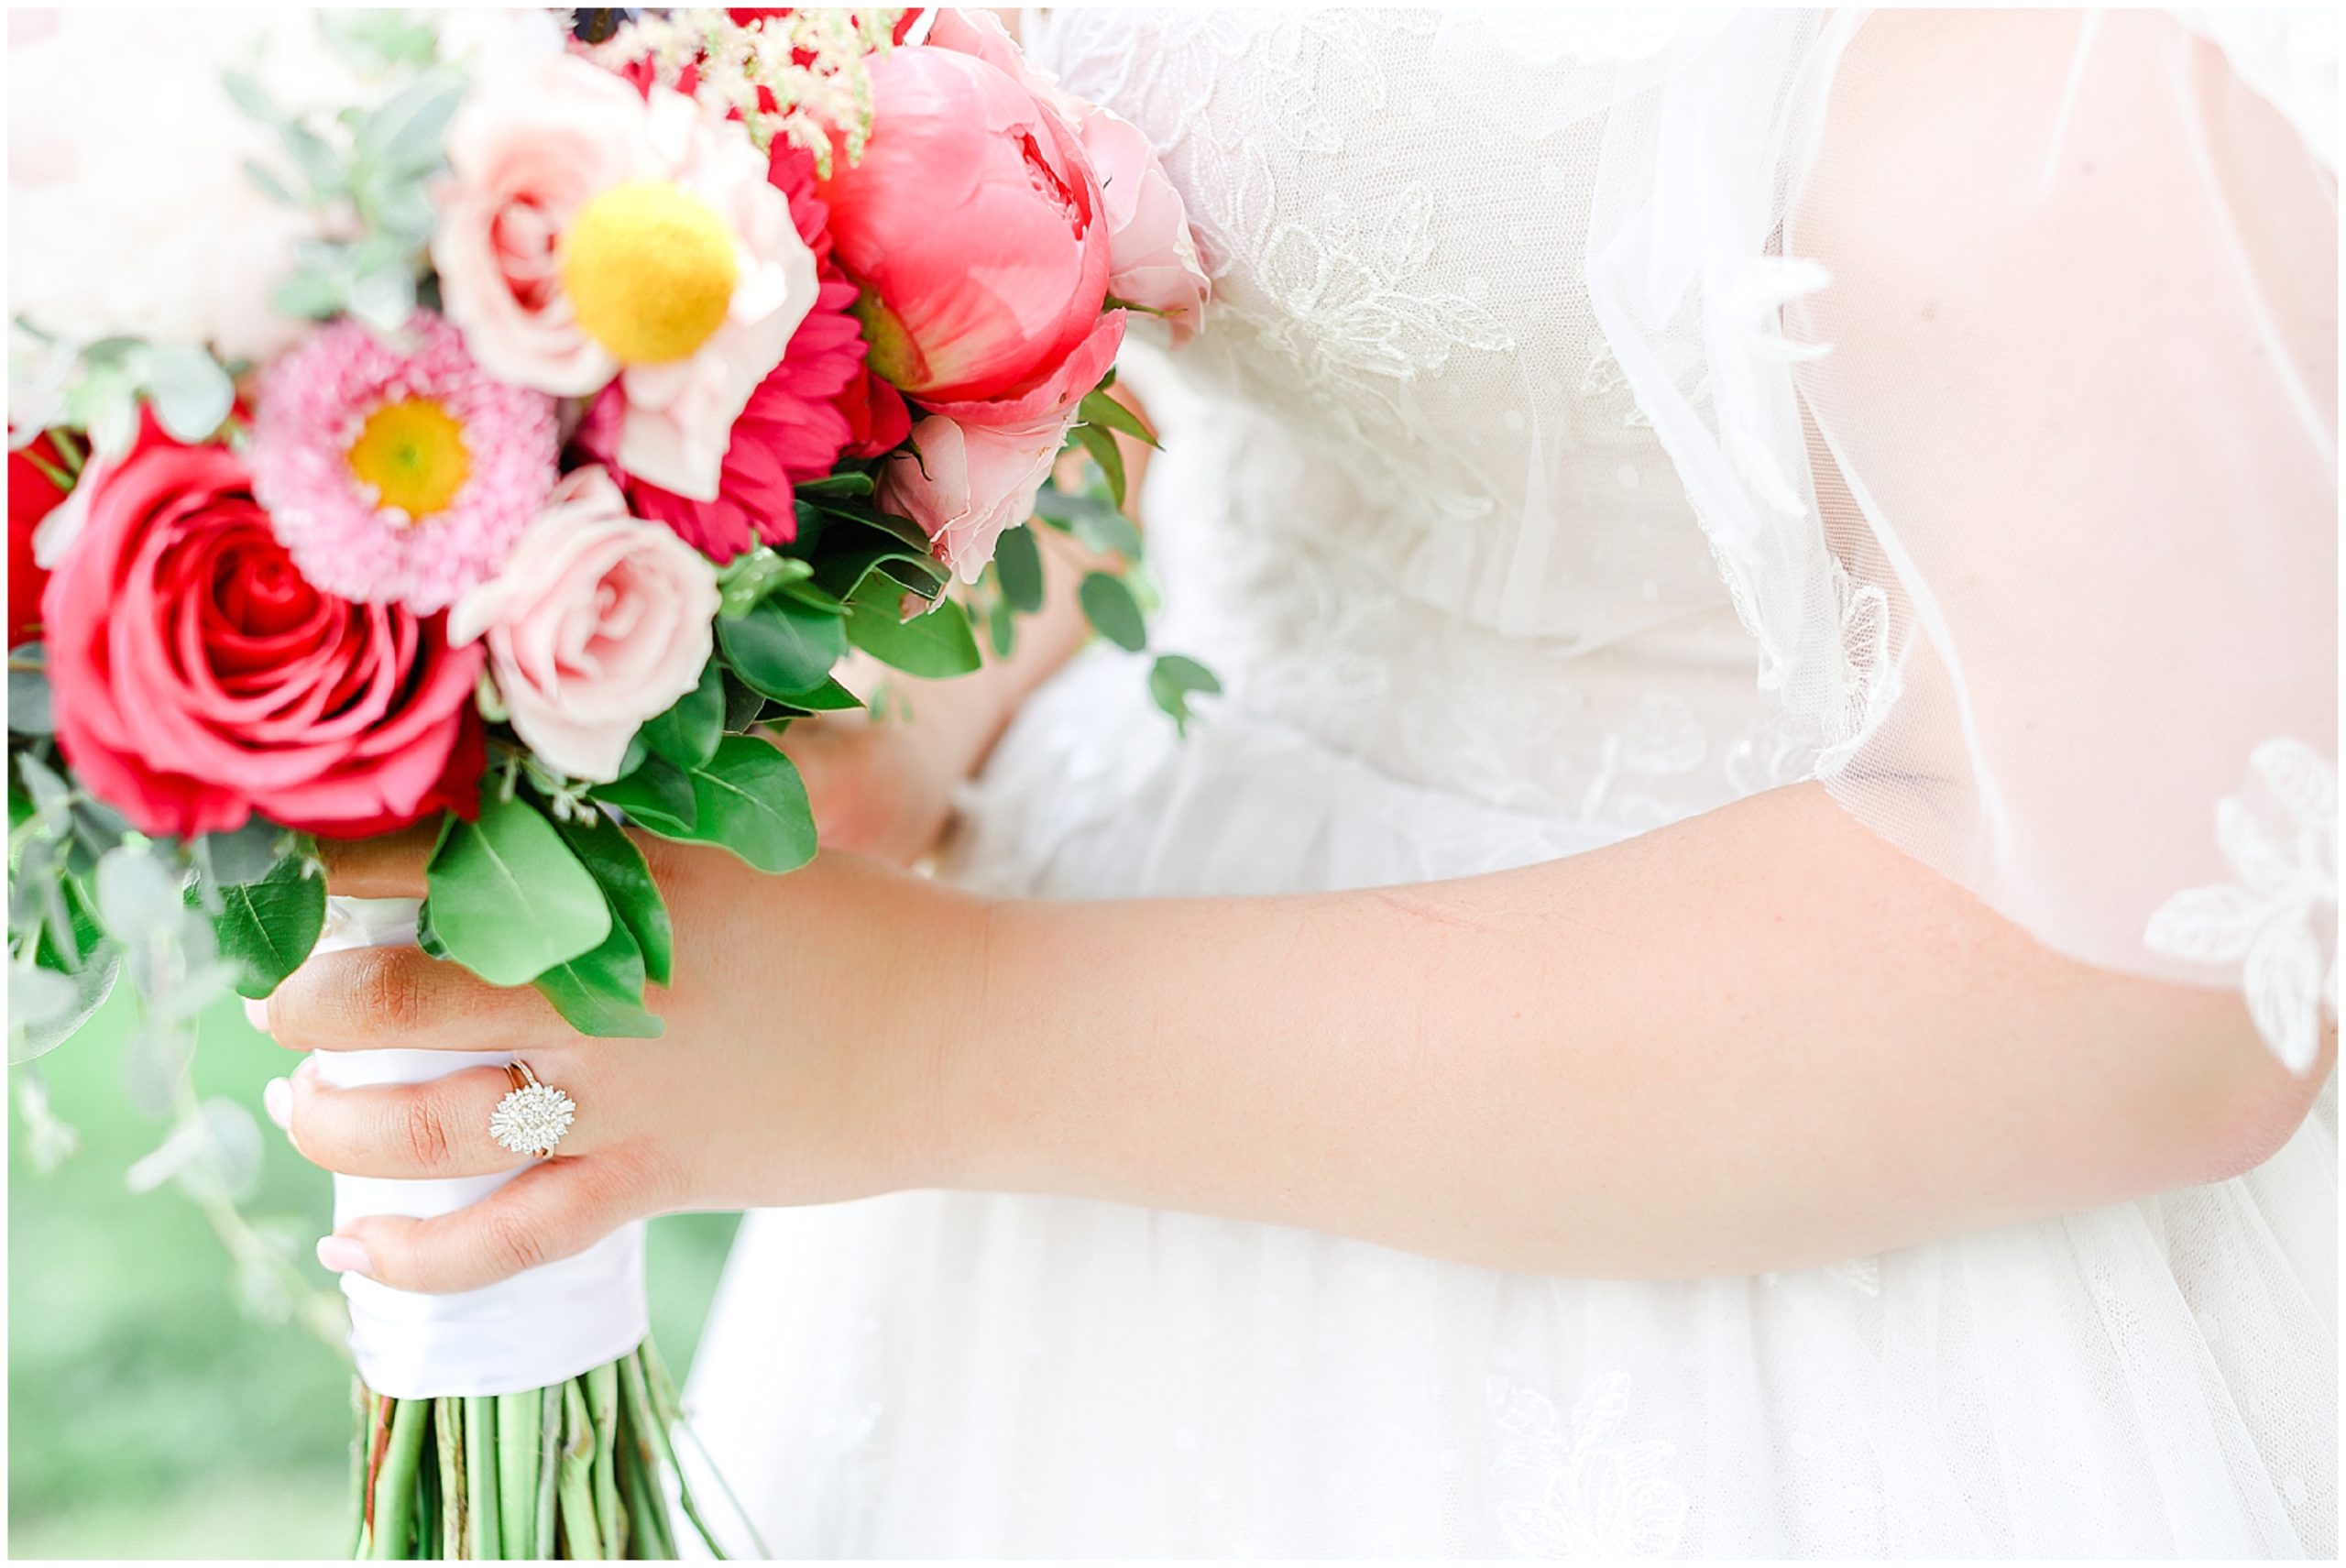 Colorful and Joyful Wedding Photography - Kansas City Wedding Photographer - The Rhapsody - gorgeous colorful wedding flowers 